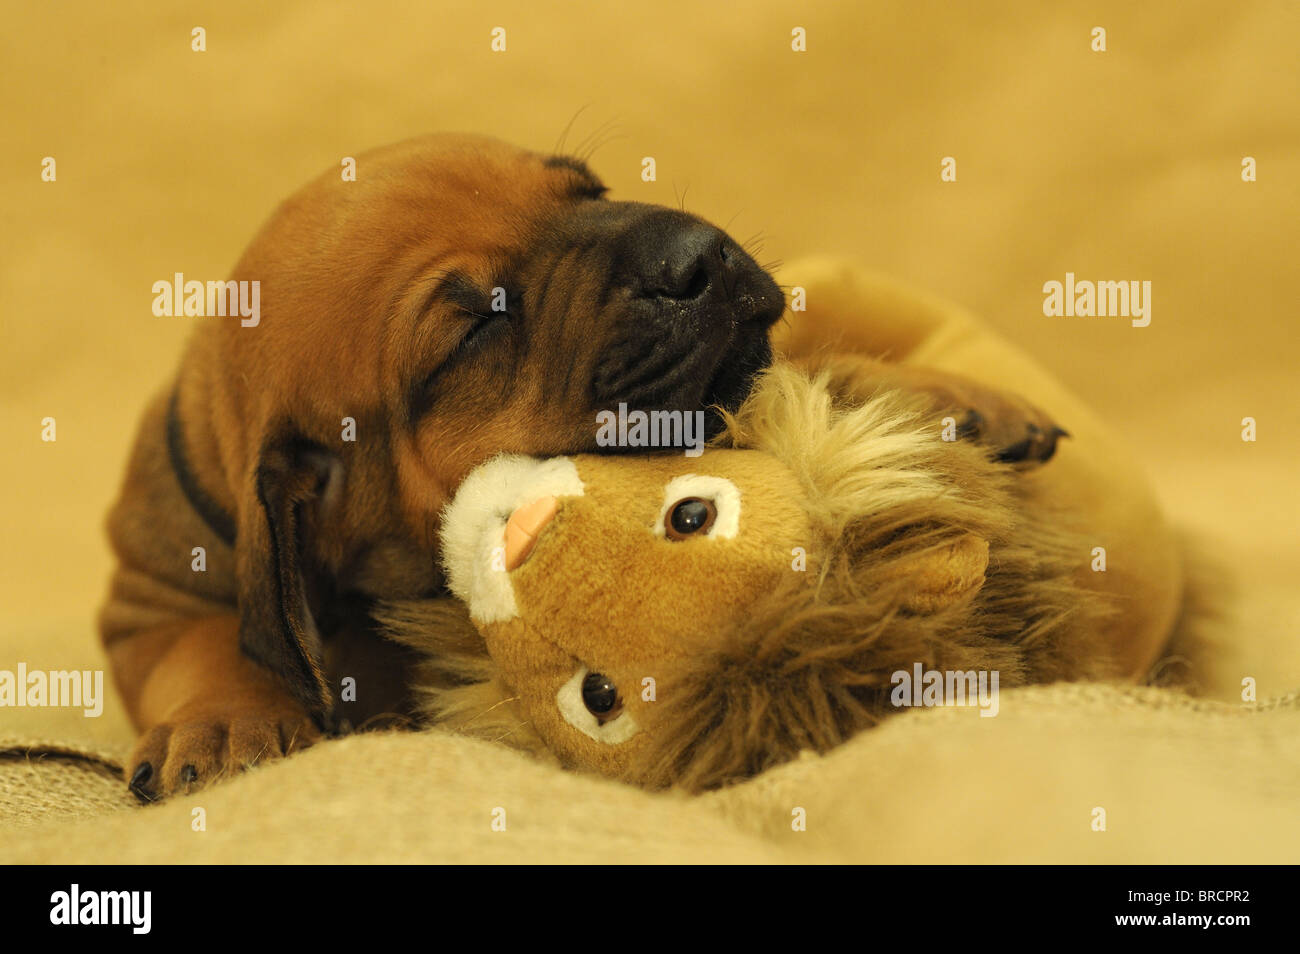 Rhodesian Ridgeback (Canis lupus familiaris). Puppy sleeping while hugging a toy lion. Stock Photo